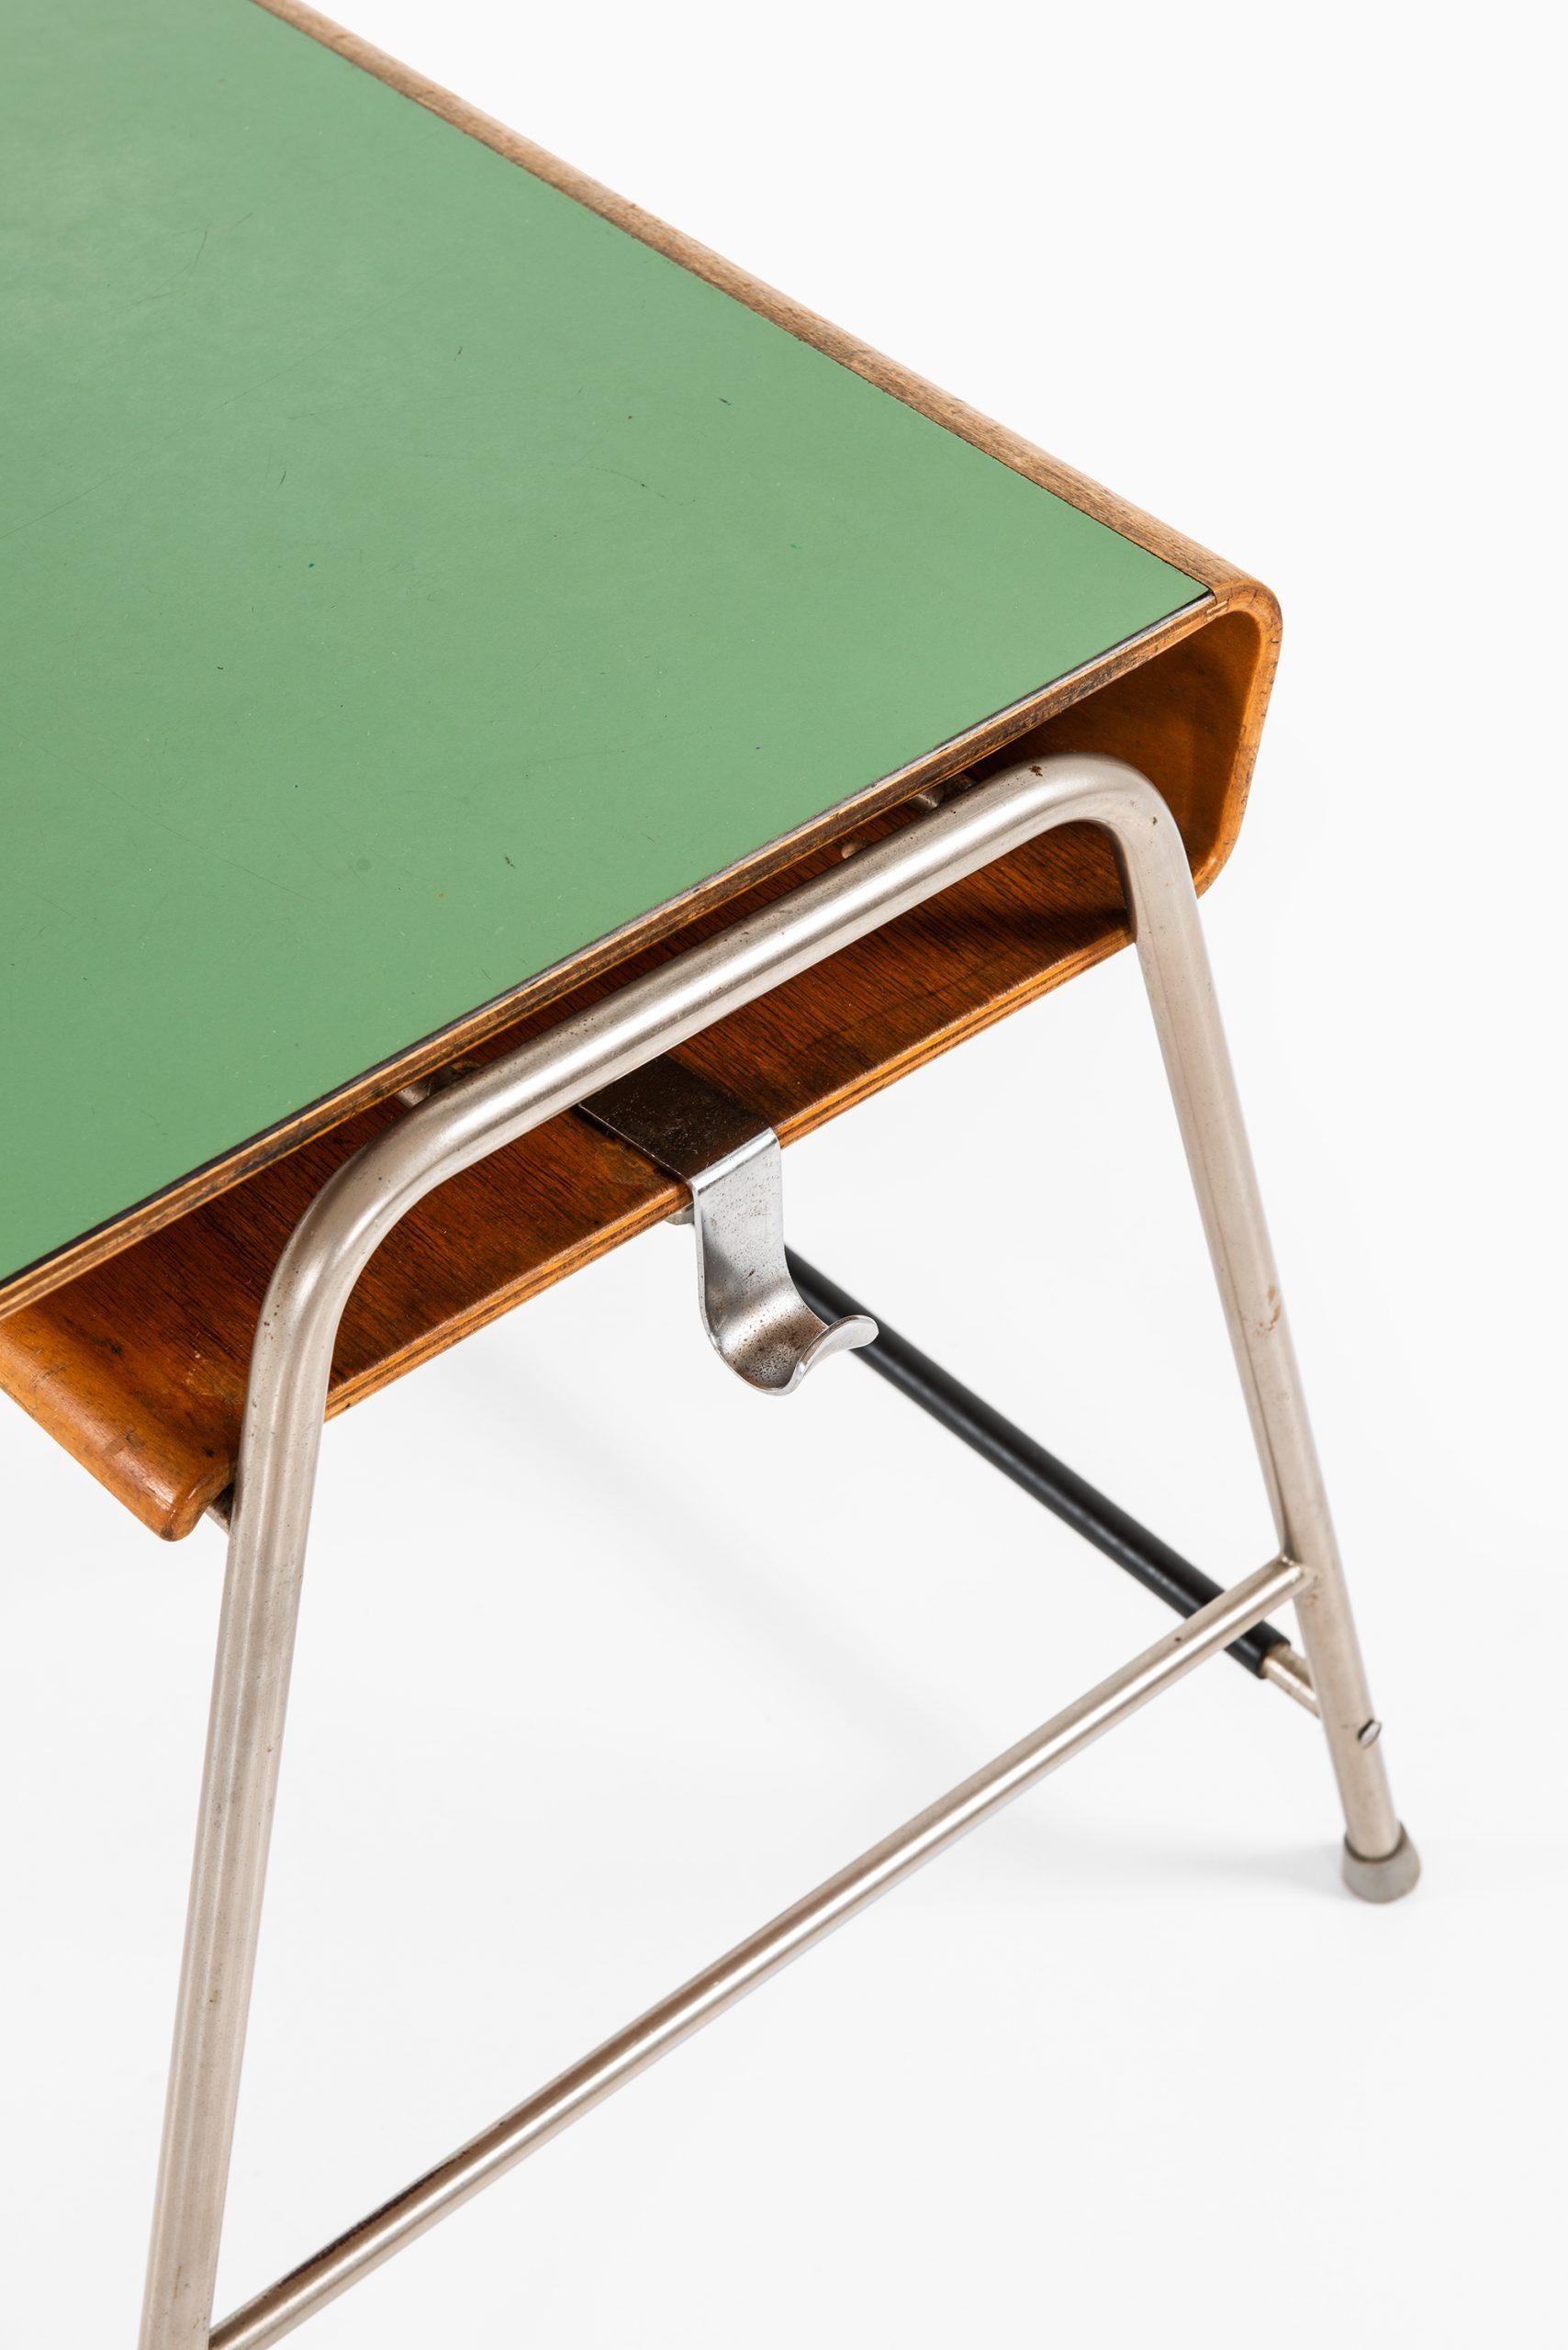 Rare Munkegaard school desk designed by Arne Jacobsen. Produced by Fritz Hansen in Denmark.